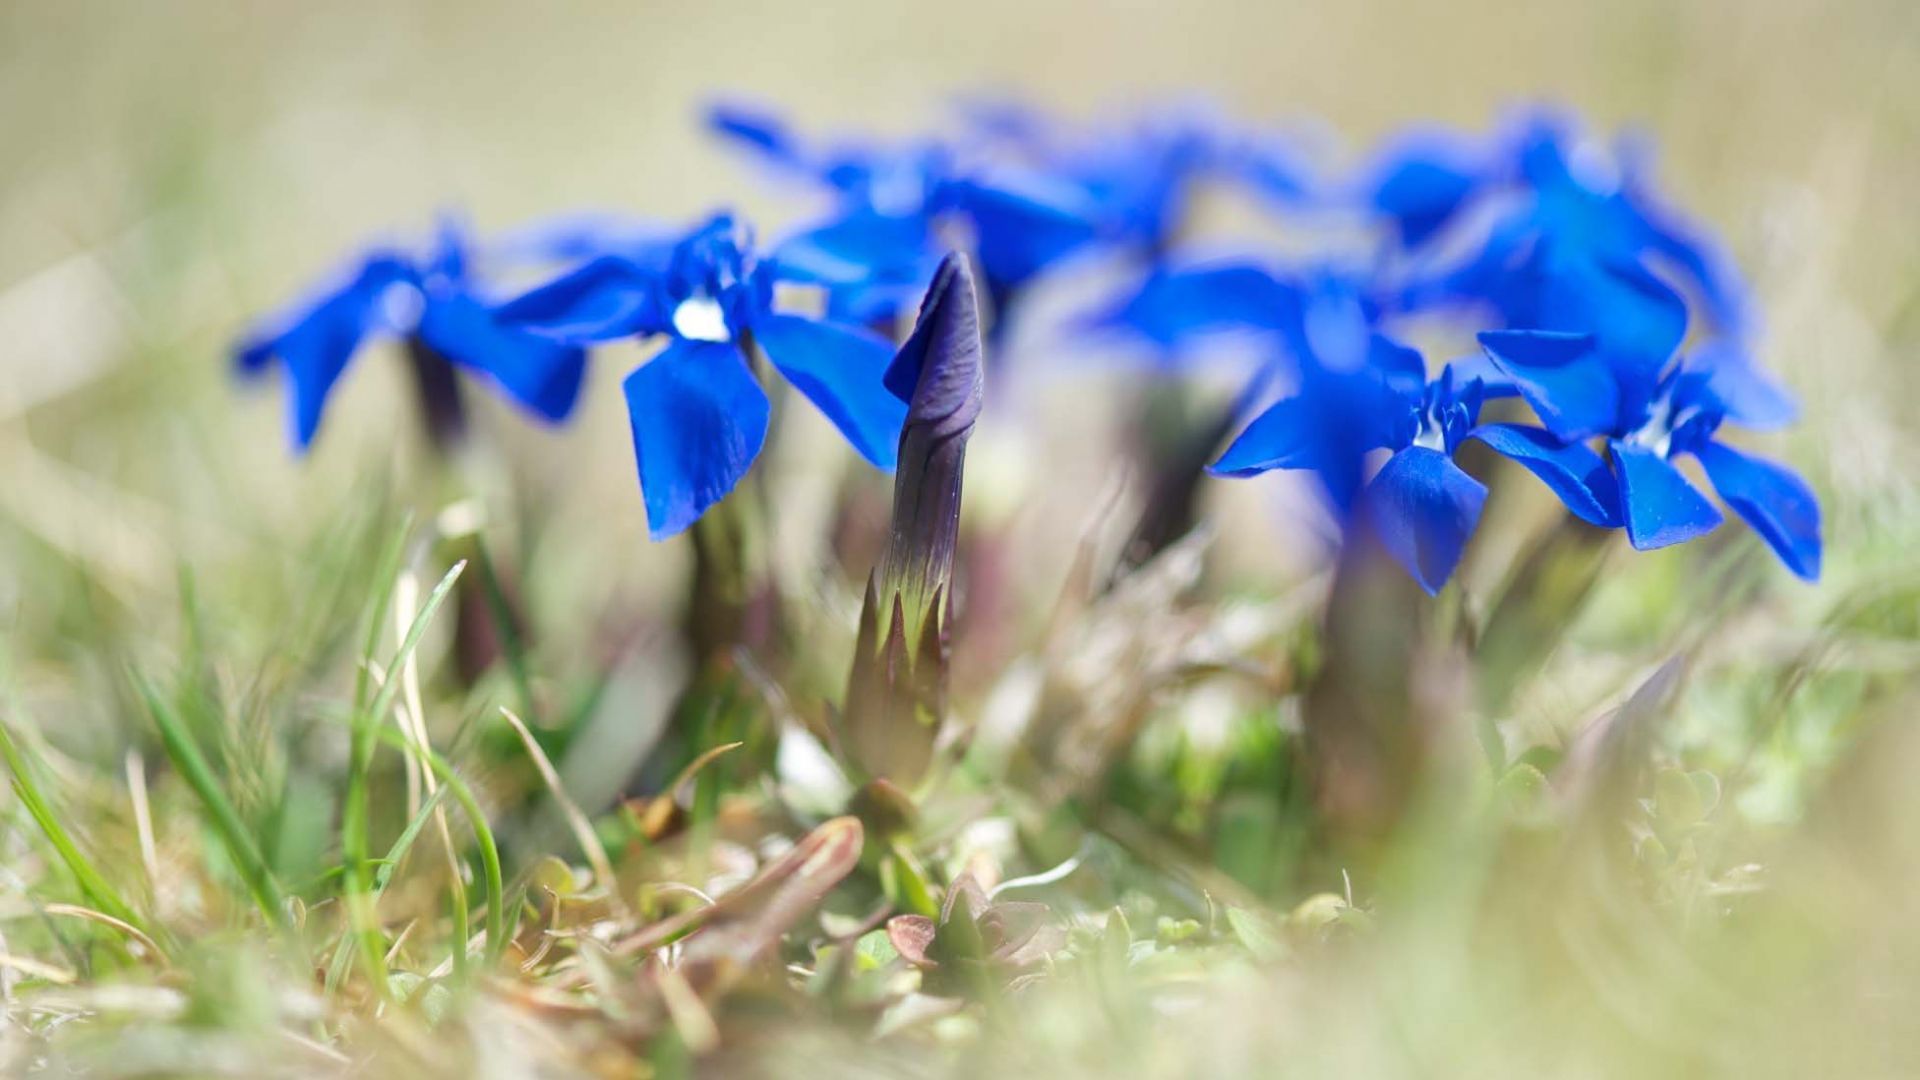 Deep Blue Flowers. HD Flowers Wallpaper for Mobile and Desktop